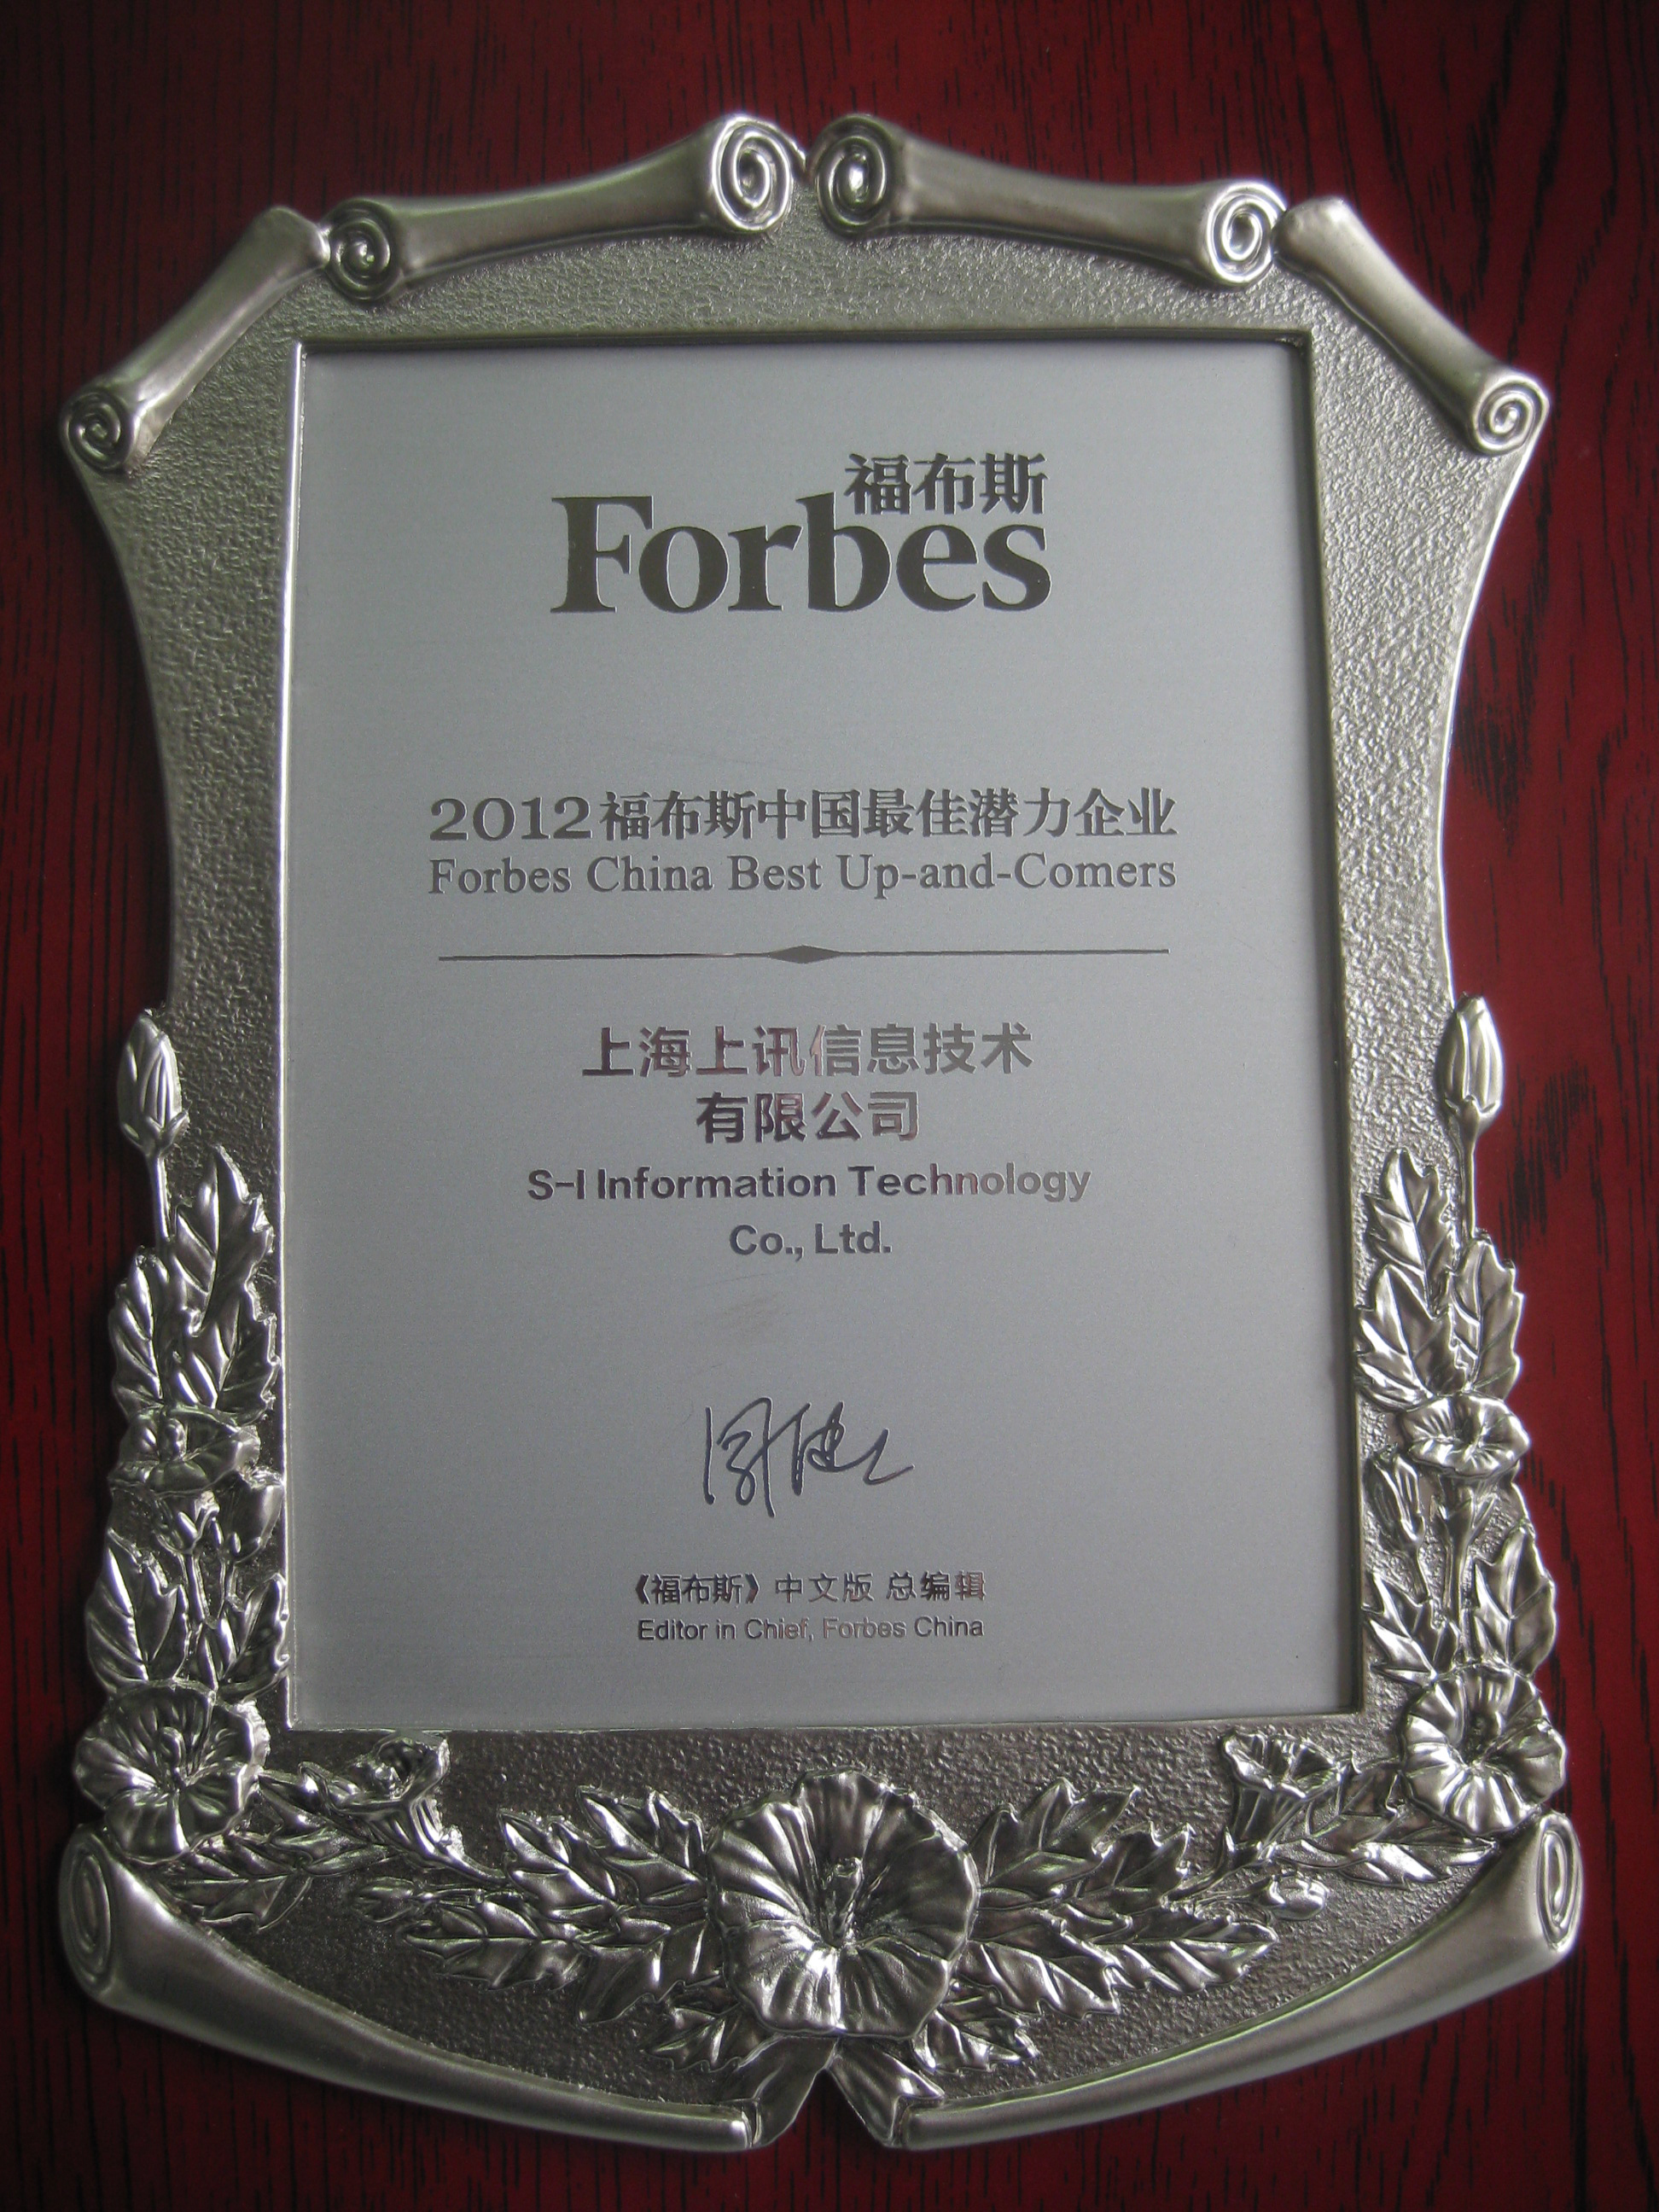 Forbes' Best Potential Enterprise